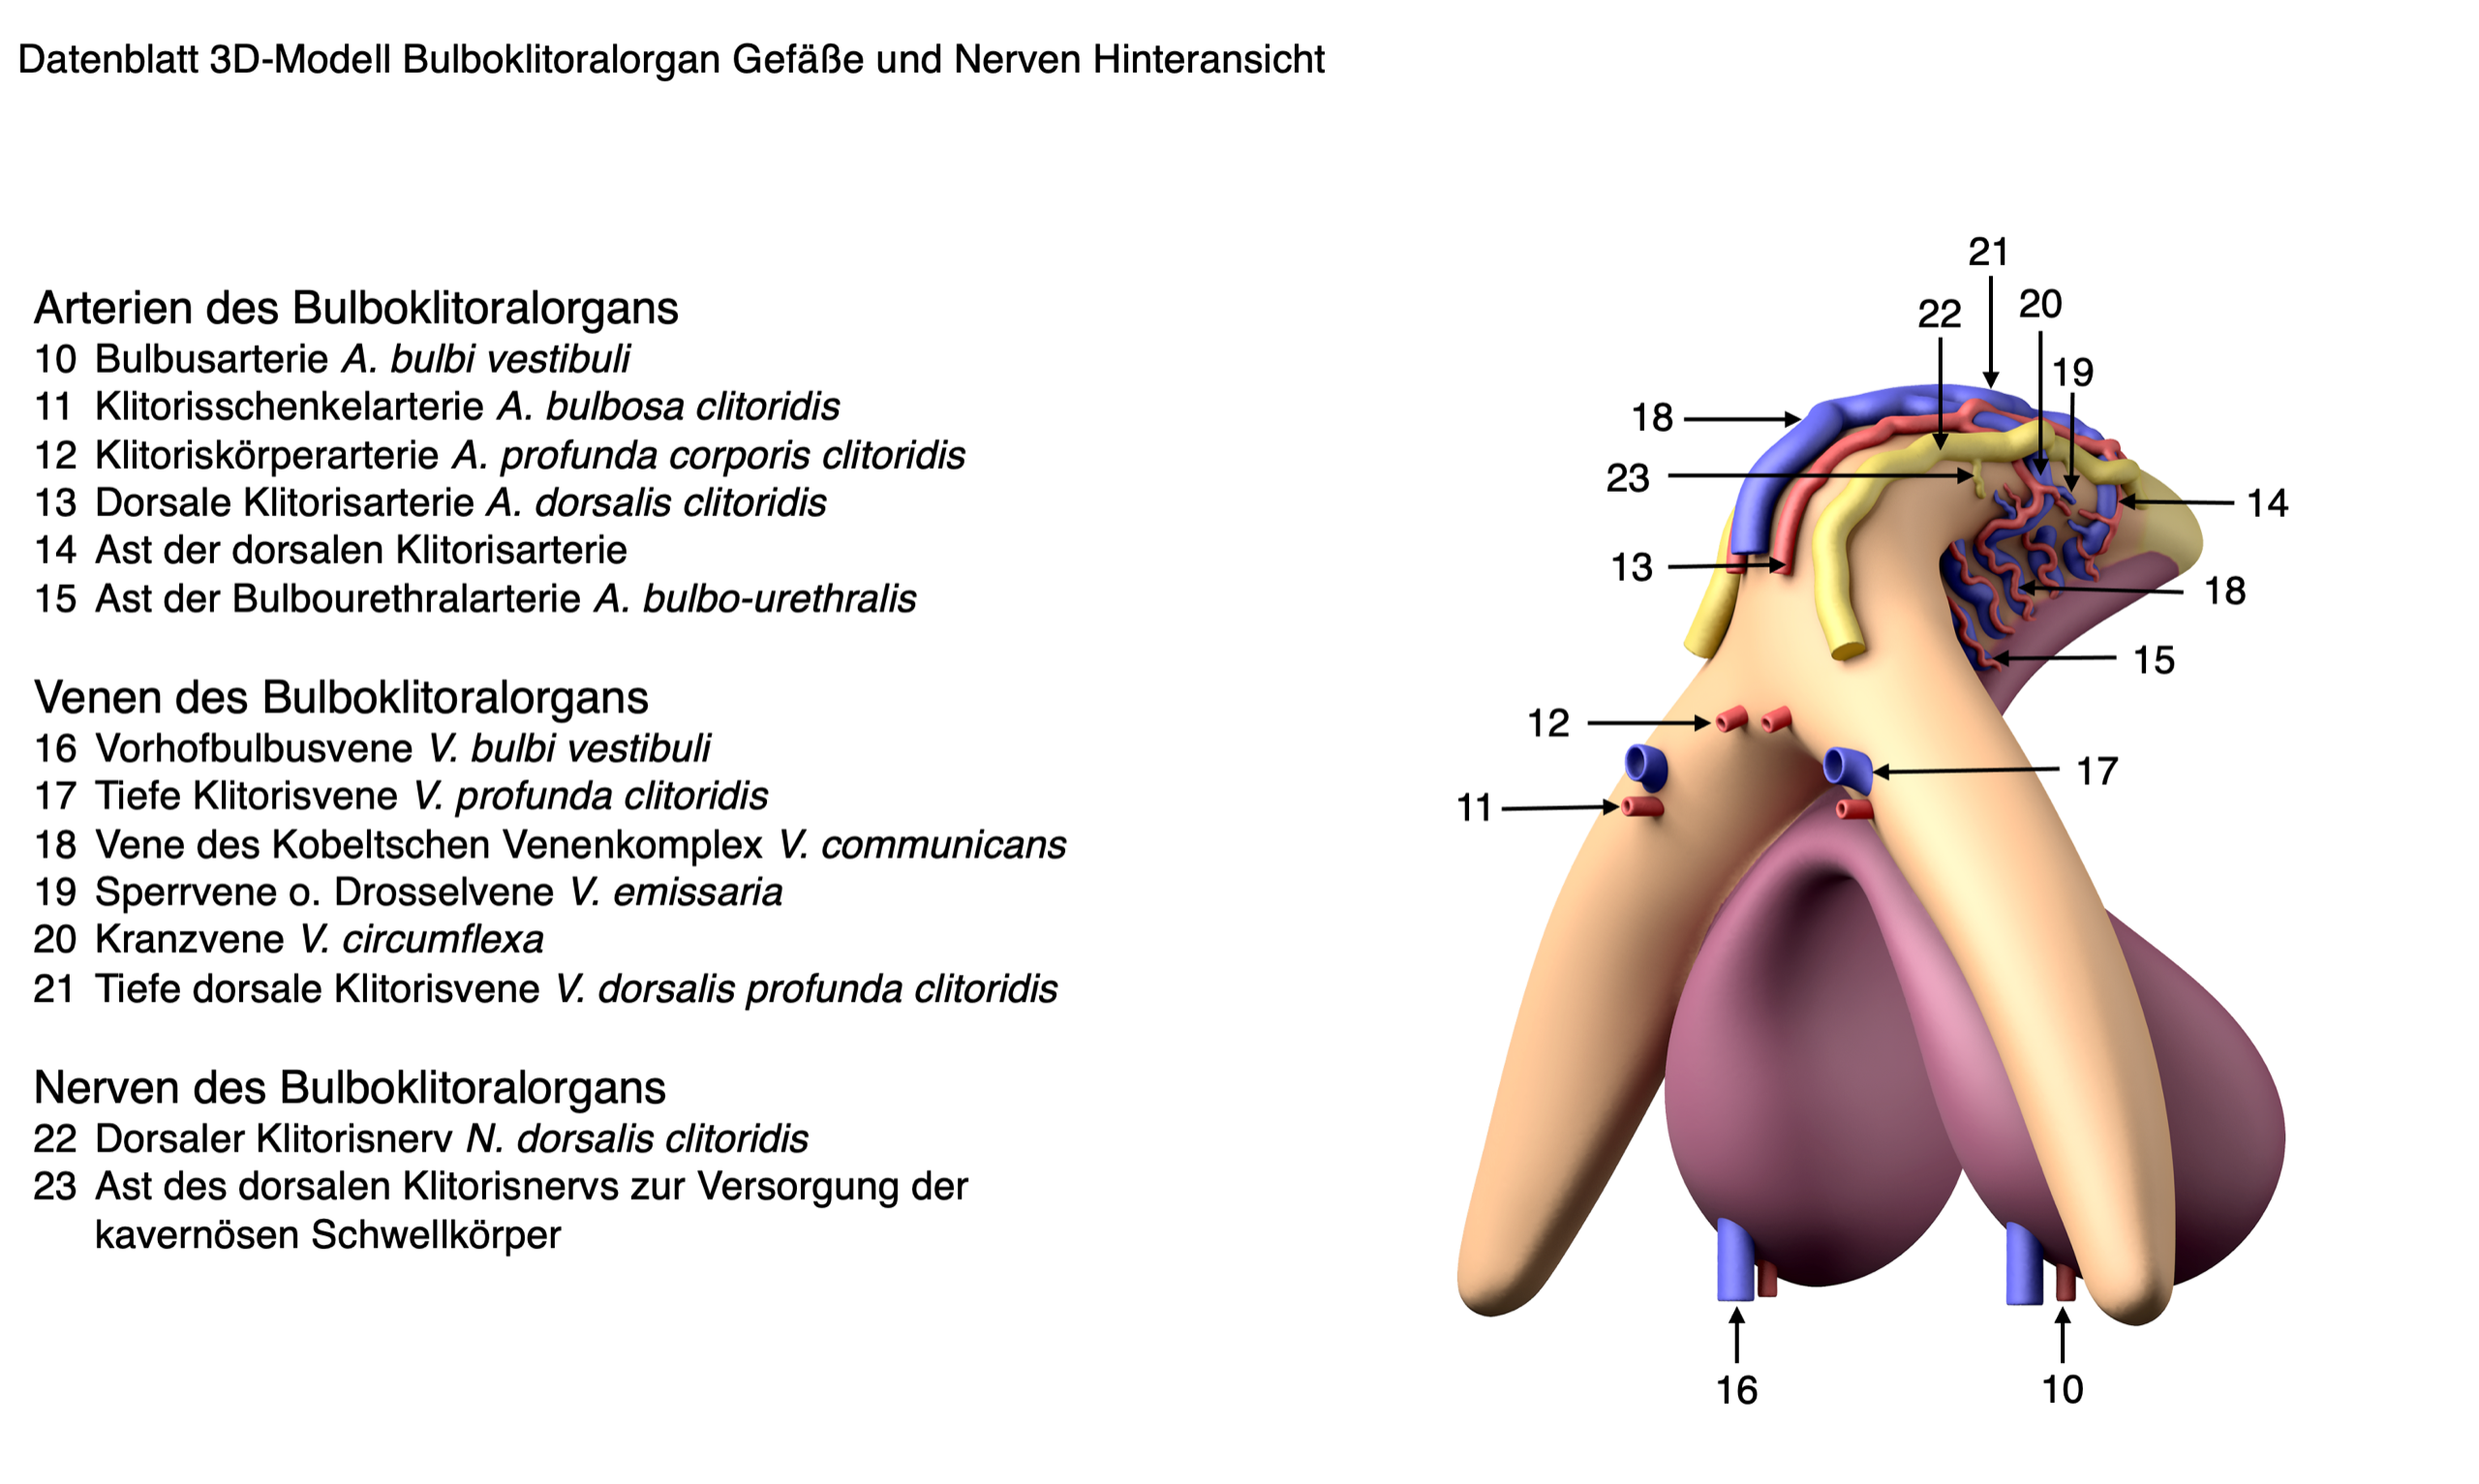 3D-Modell Bulboklitoralorgan  | nach Prof. Dr. D. Haag-Wackernagel